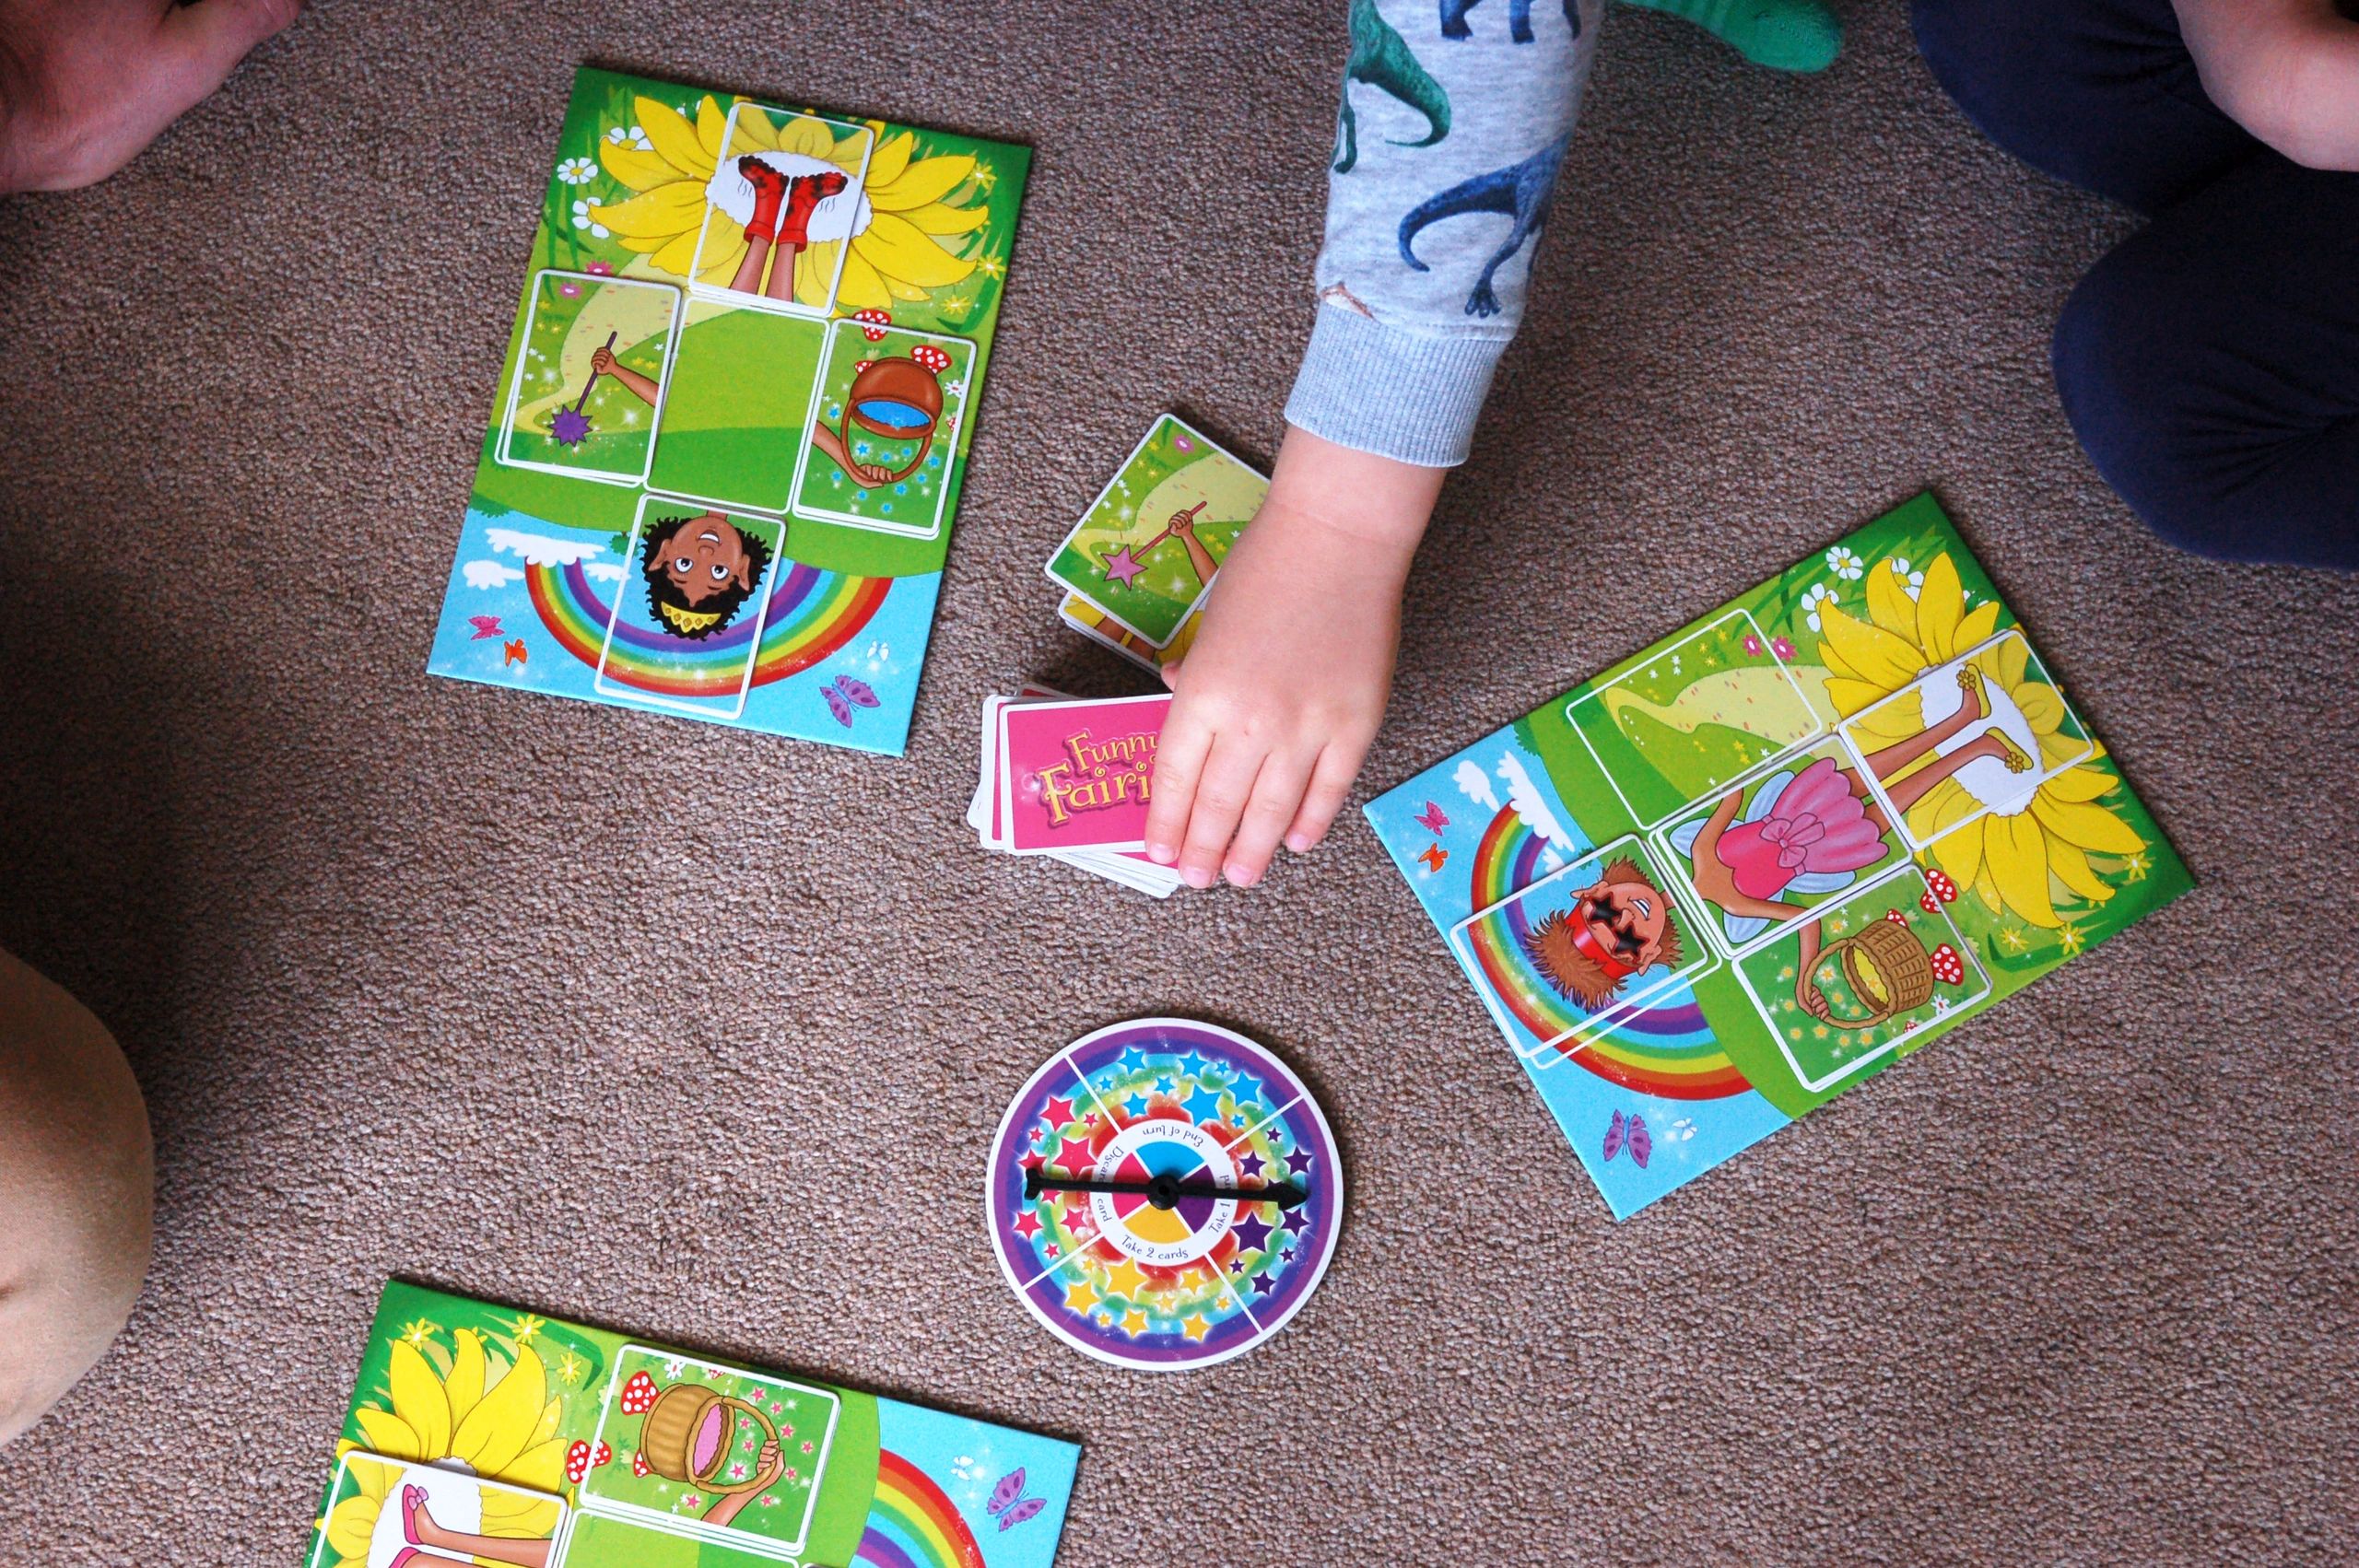 Little Acorn Games - Children's Board Game, Fairy Game